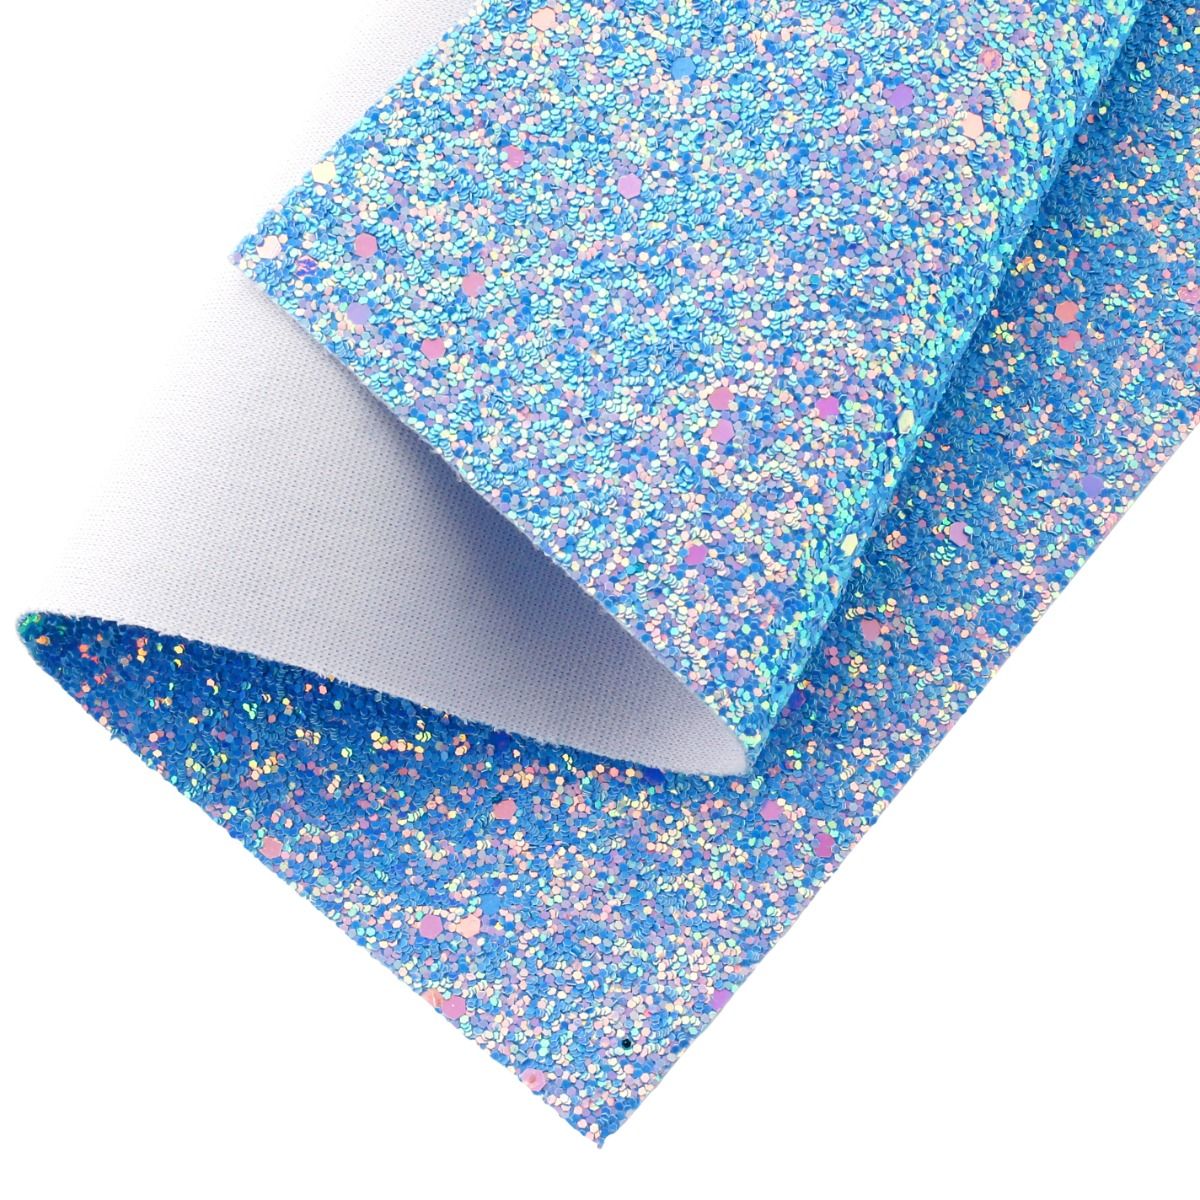 Iridescent Mermaid Chunky Glitter Fabric Crafting Sheets